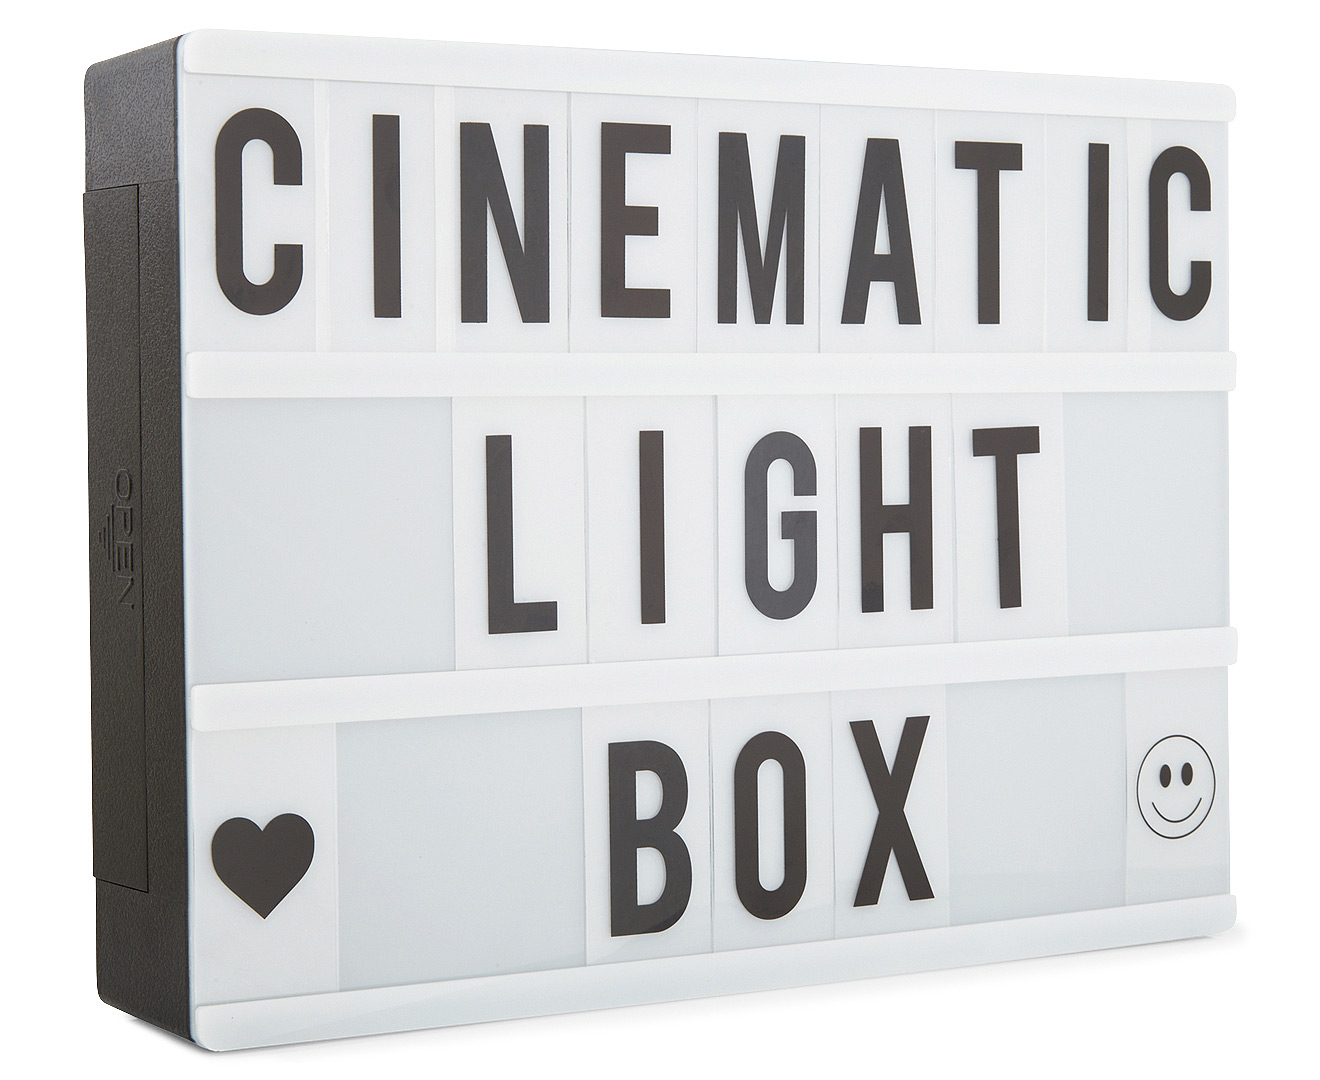 Cinematic 85-Letter Light Box - White/Black | Catch.com.au